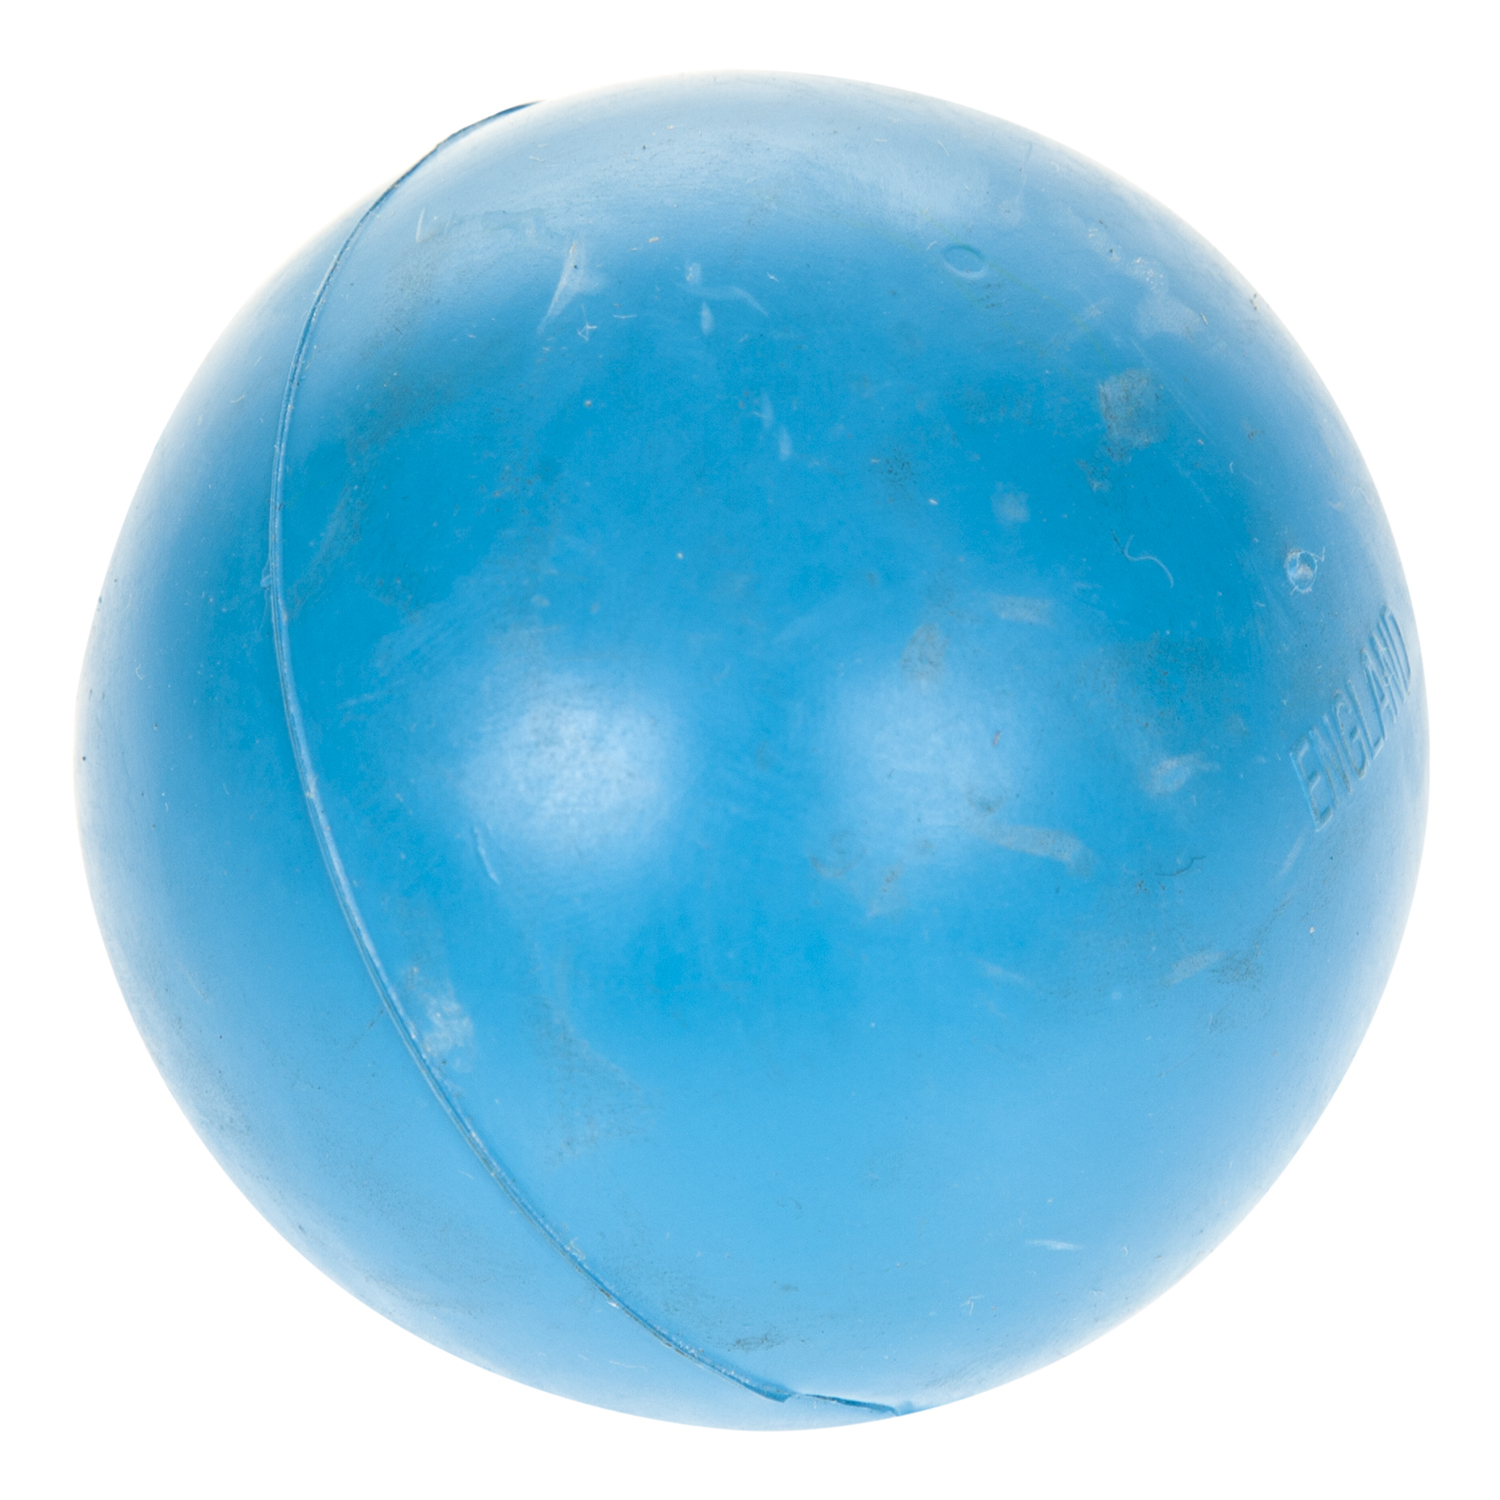 Dog Tough Toy Ball - Ball Blue Image